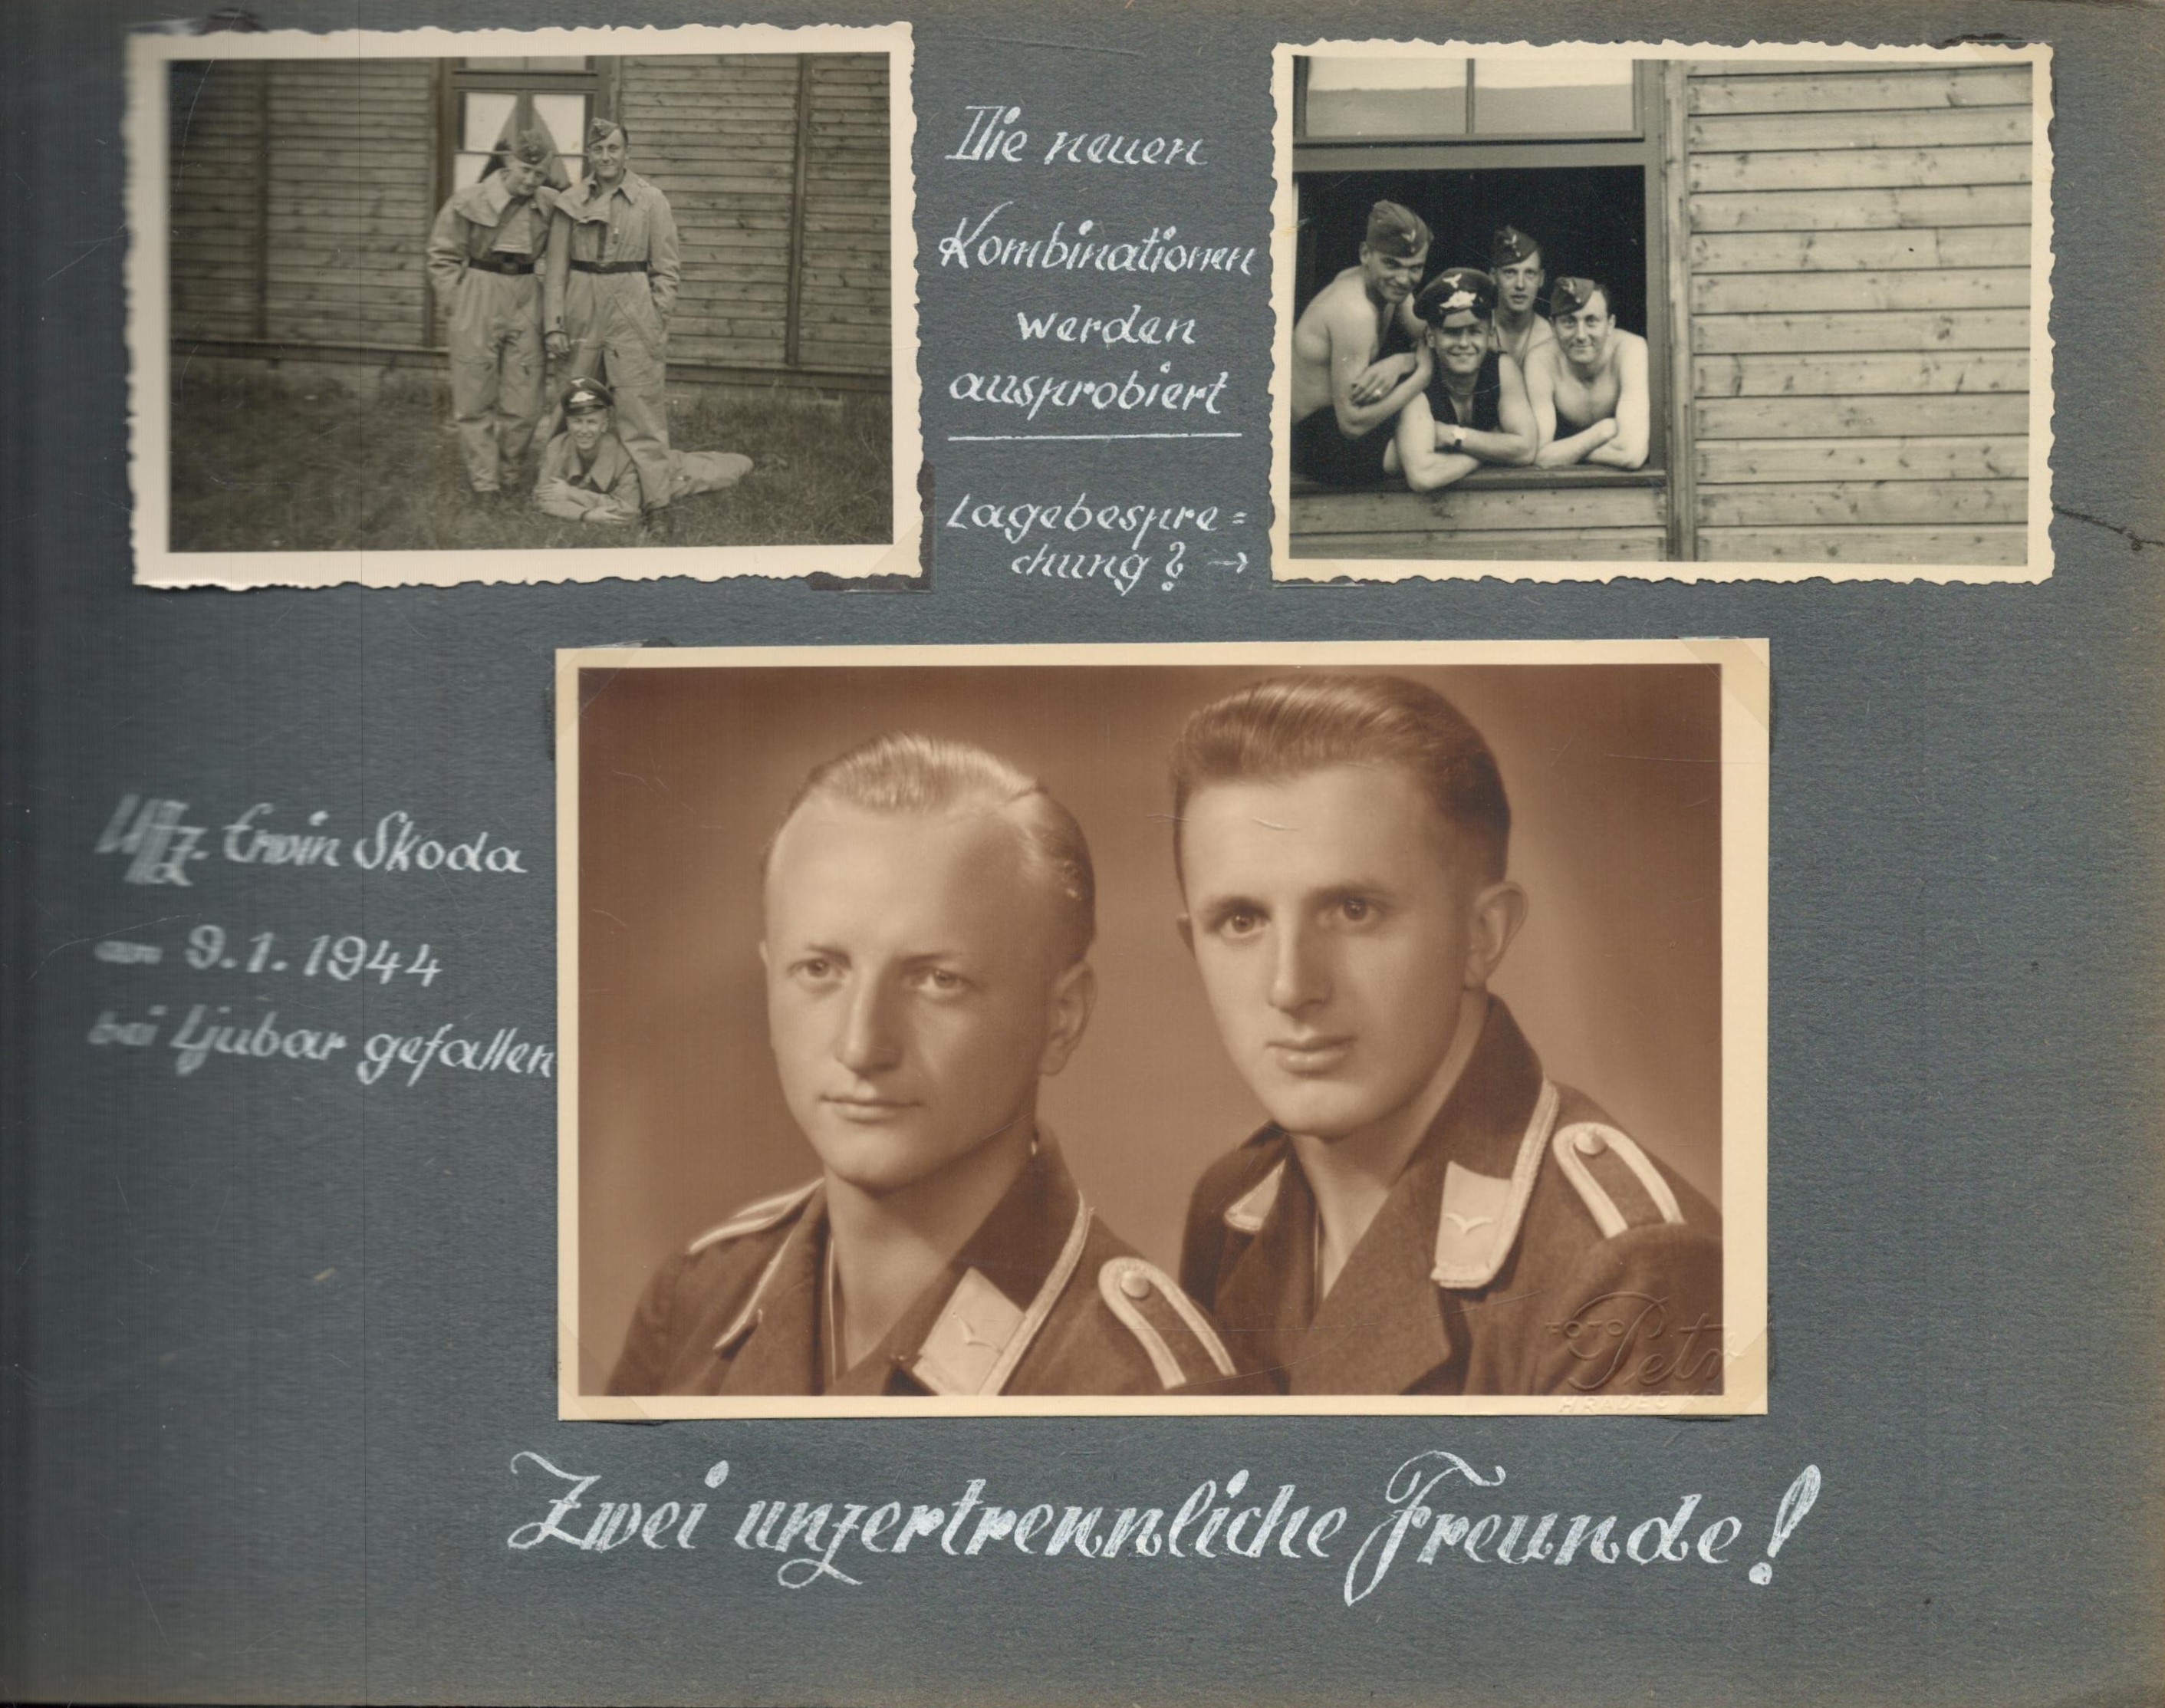 Luftwaffe Stuka Operator photo album of the career and war memories of Erich Heine rear gunner and - Image 9 of 12